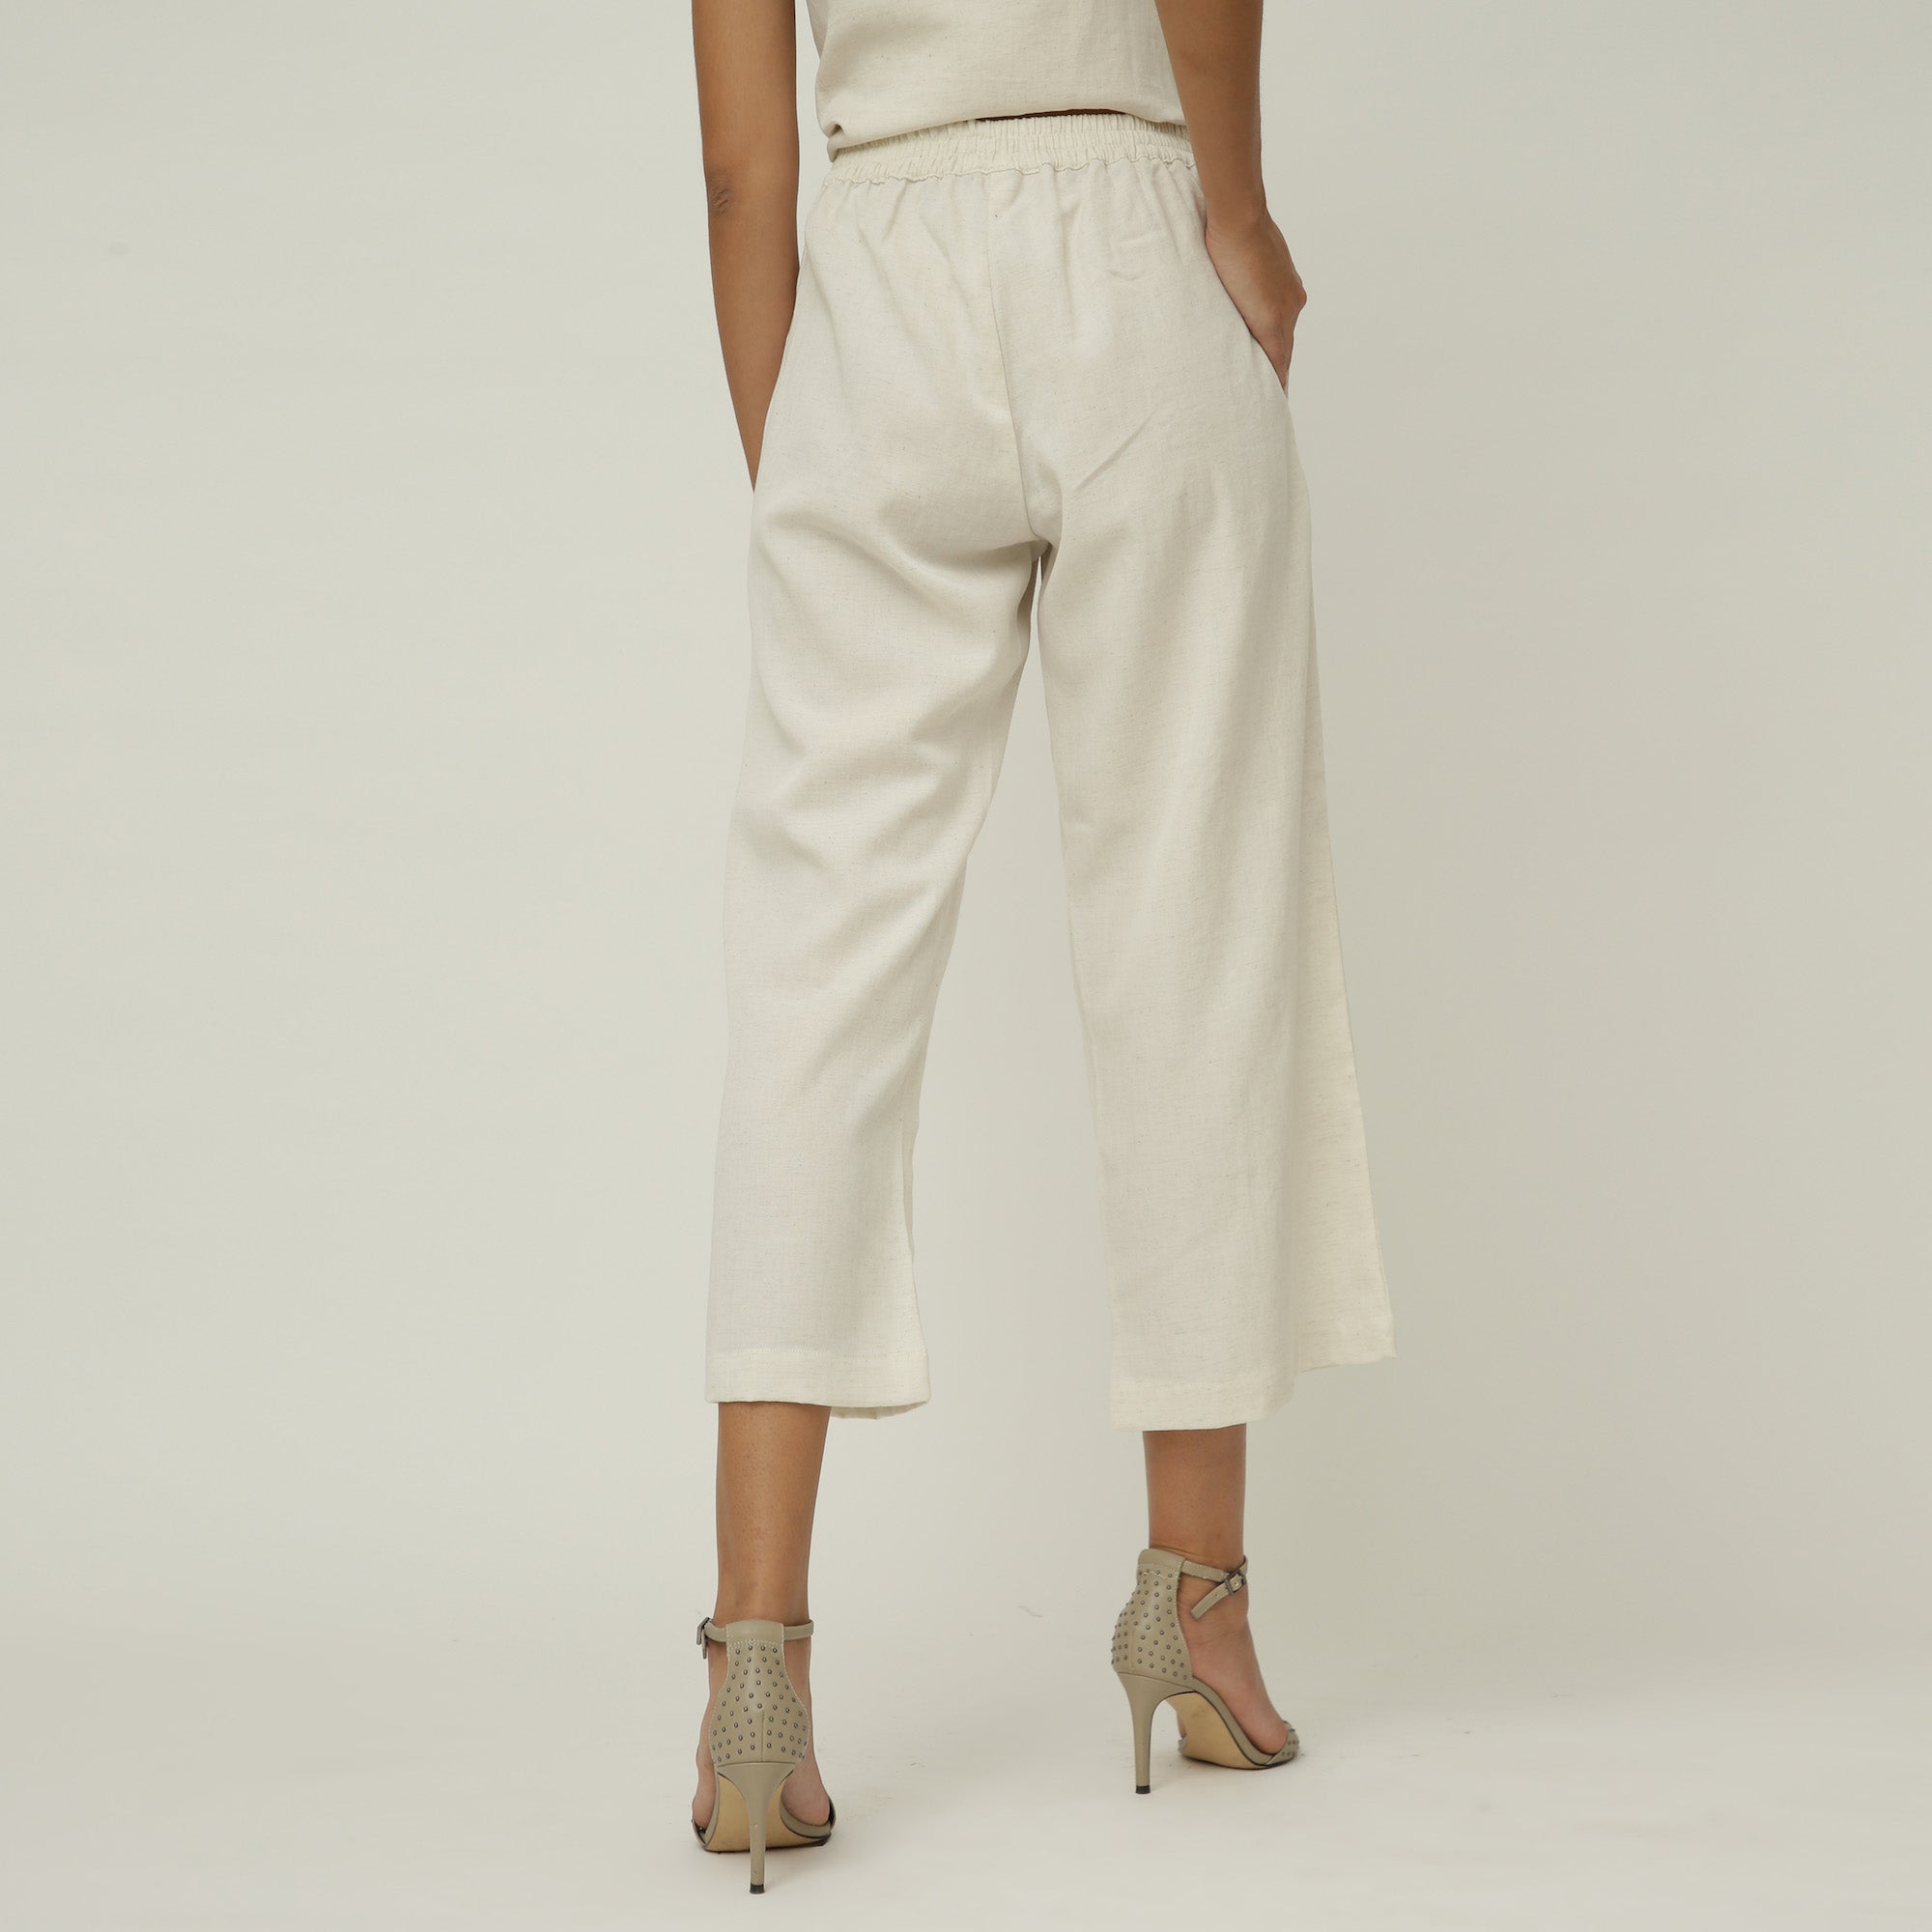 Florence Set of 3 - Long Shirt Overlay, Slip Top & Pants - White & Powder Blue